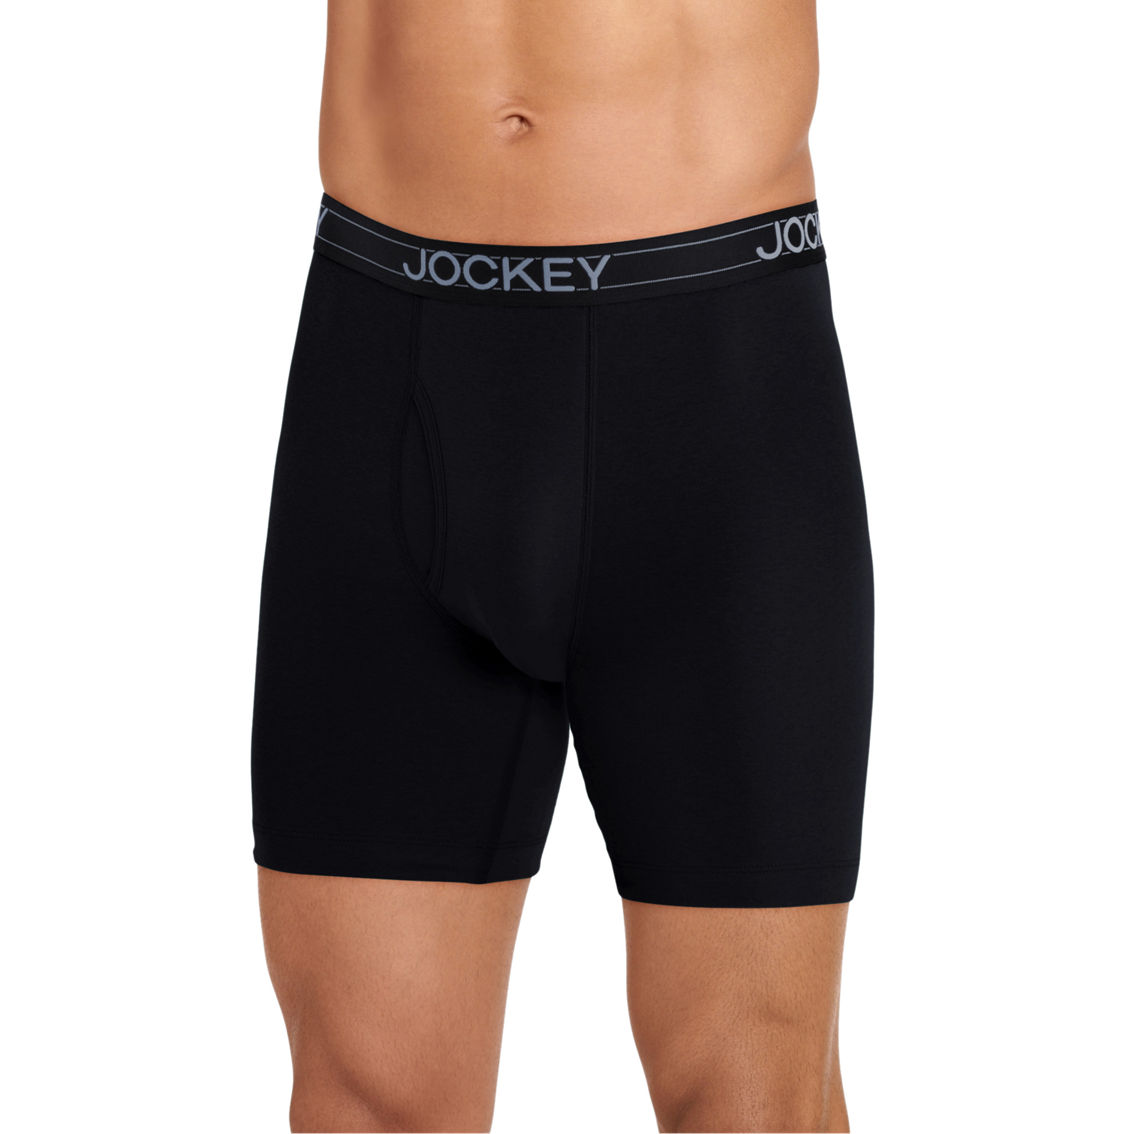 Jockey Cotton Blend Long Leg | Underwear | Clothing & Accessories ...